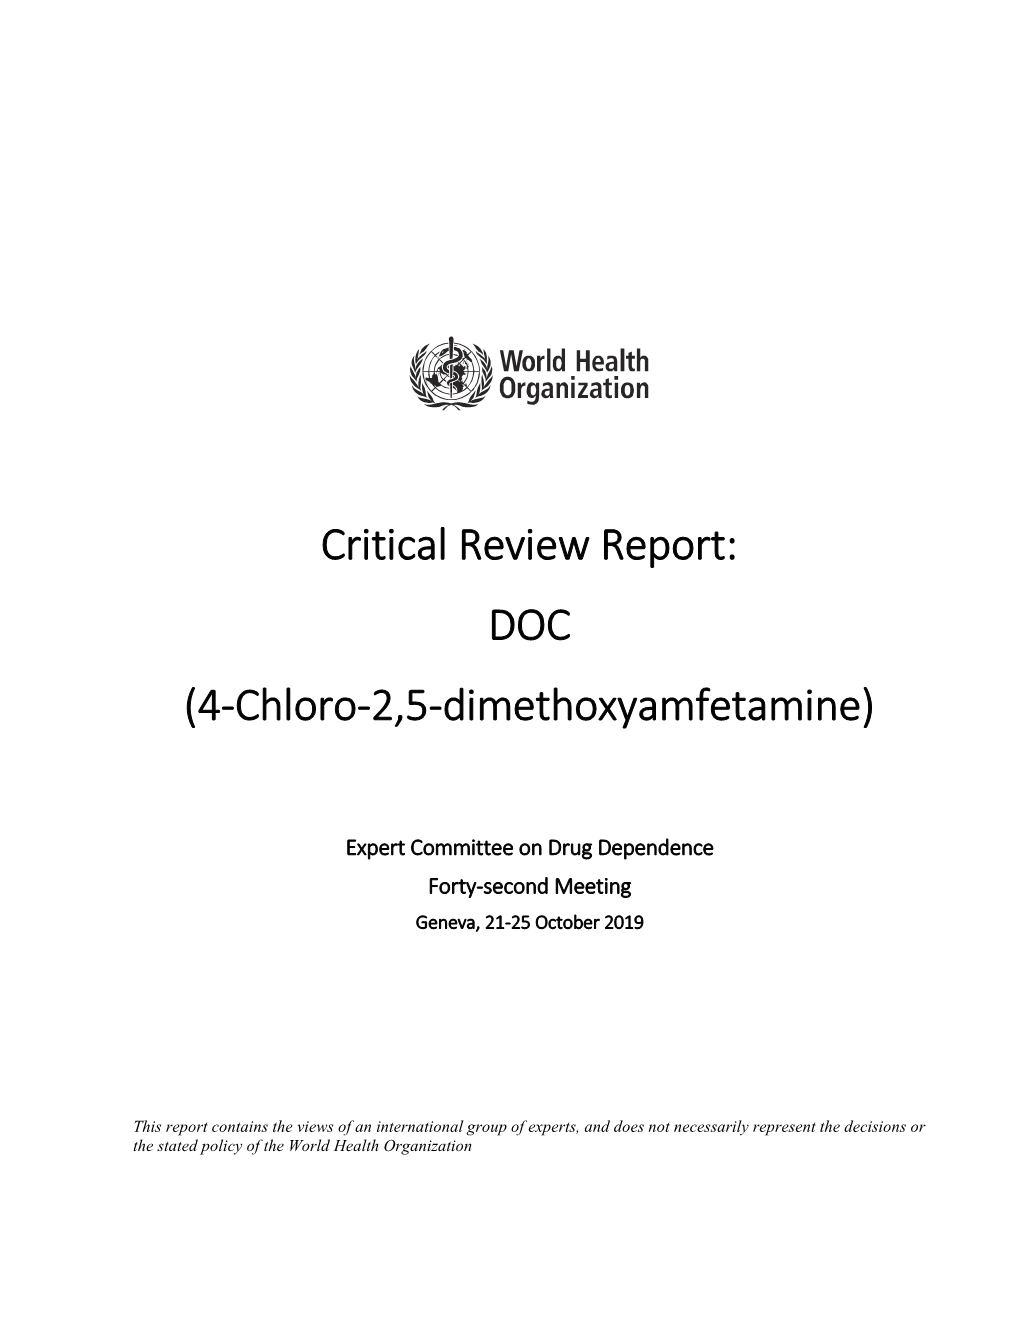 Critical Review Report: DOC (4-Chloro-2,5-Dimethoxyamfetamine)